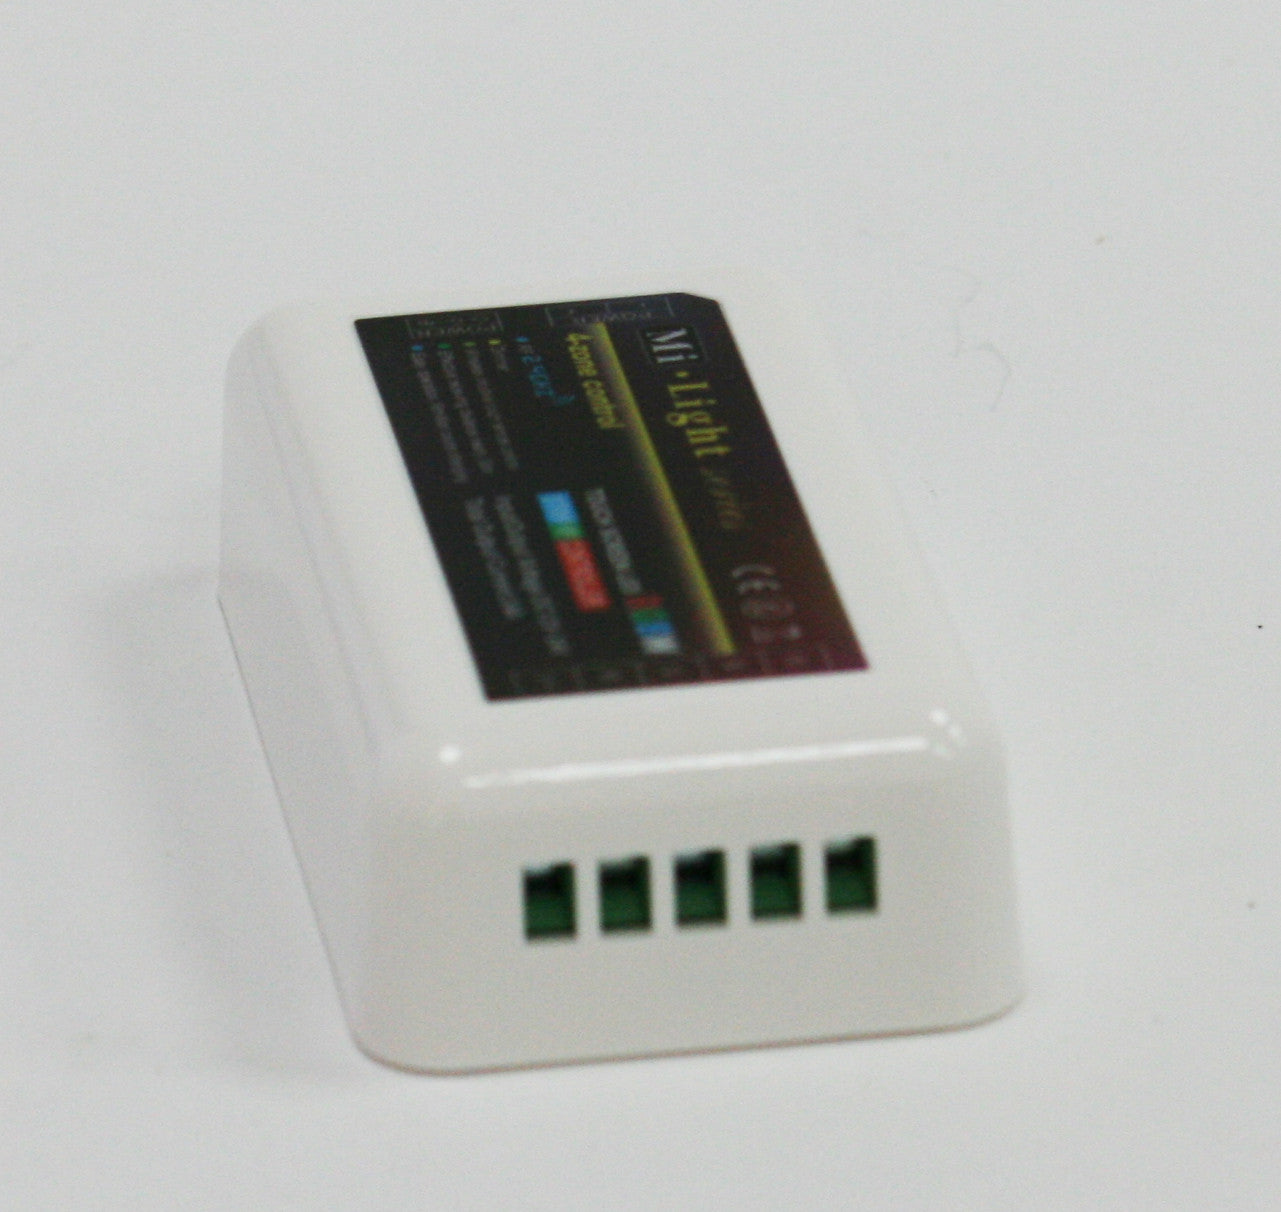 Mi-Light 4-Zone LED Remote Controller - COM-14711 - SparkFun Electronics